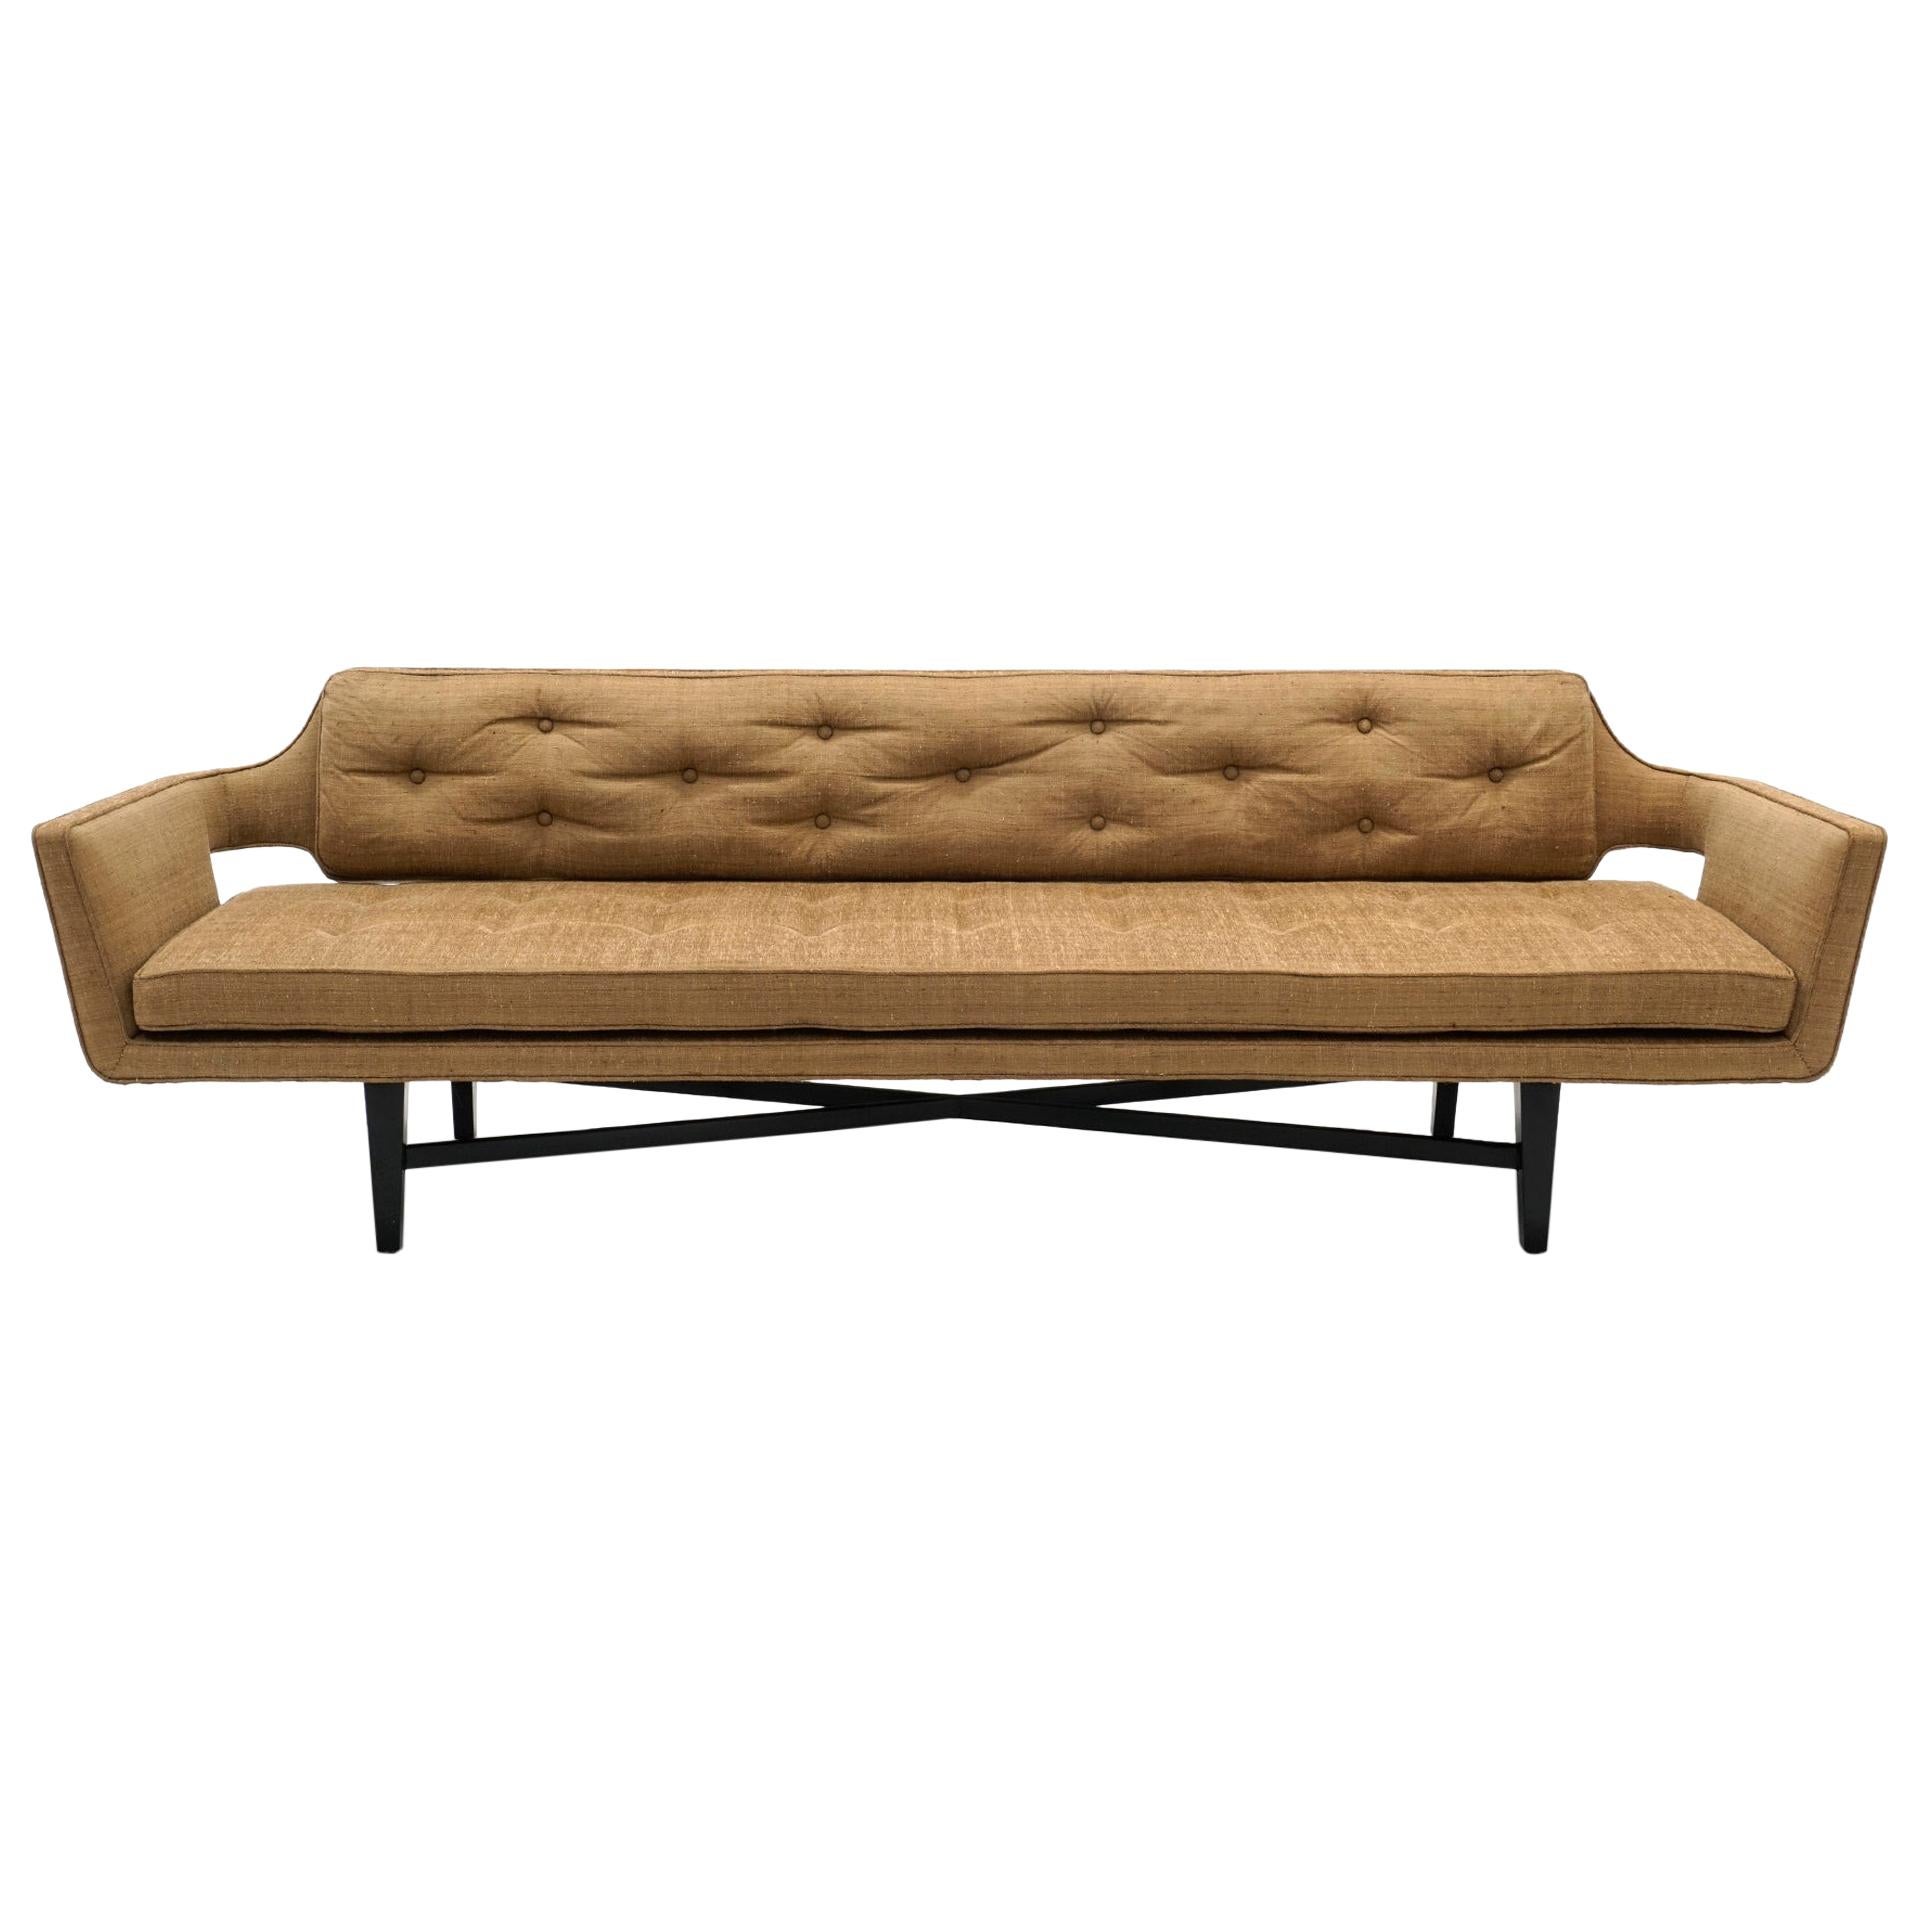 Sofa by Edward Wormley for Dunbar, Beautiful Original Condition, Tan Silk Fabric